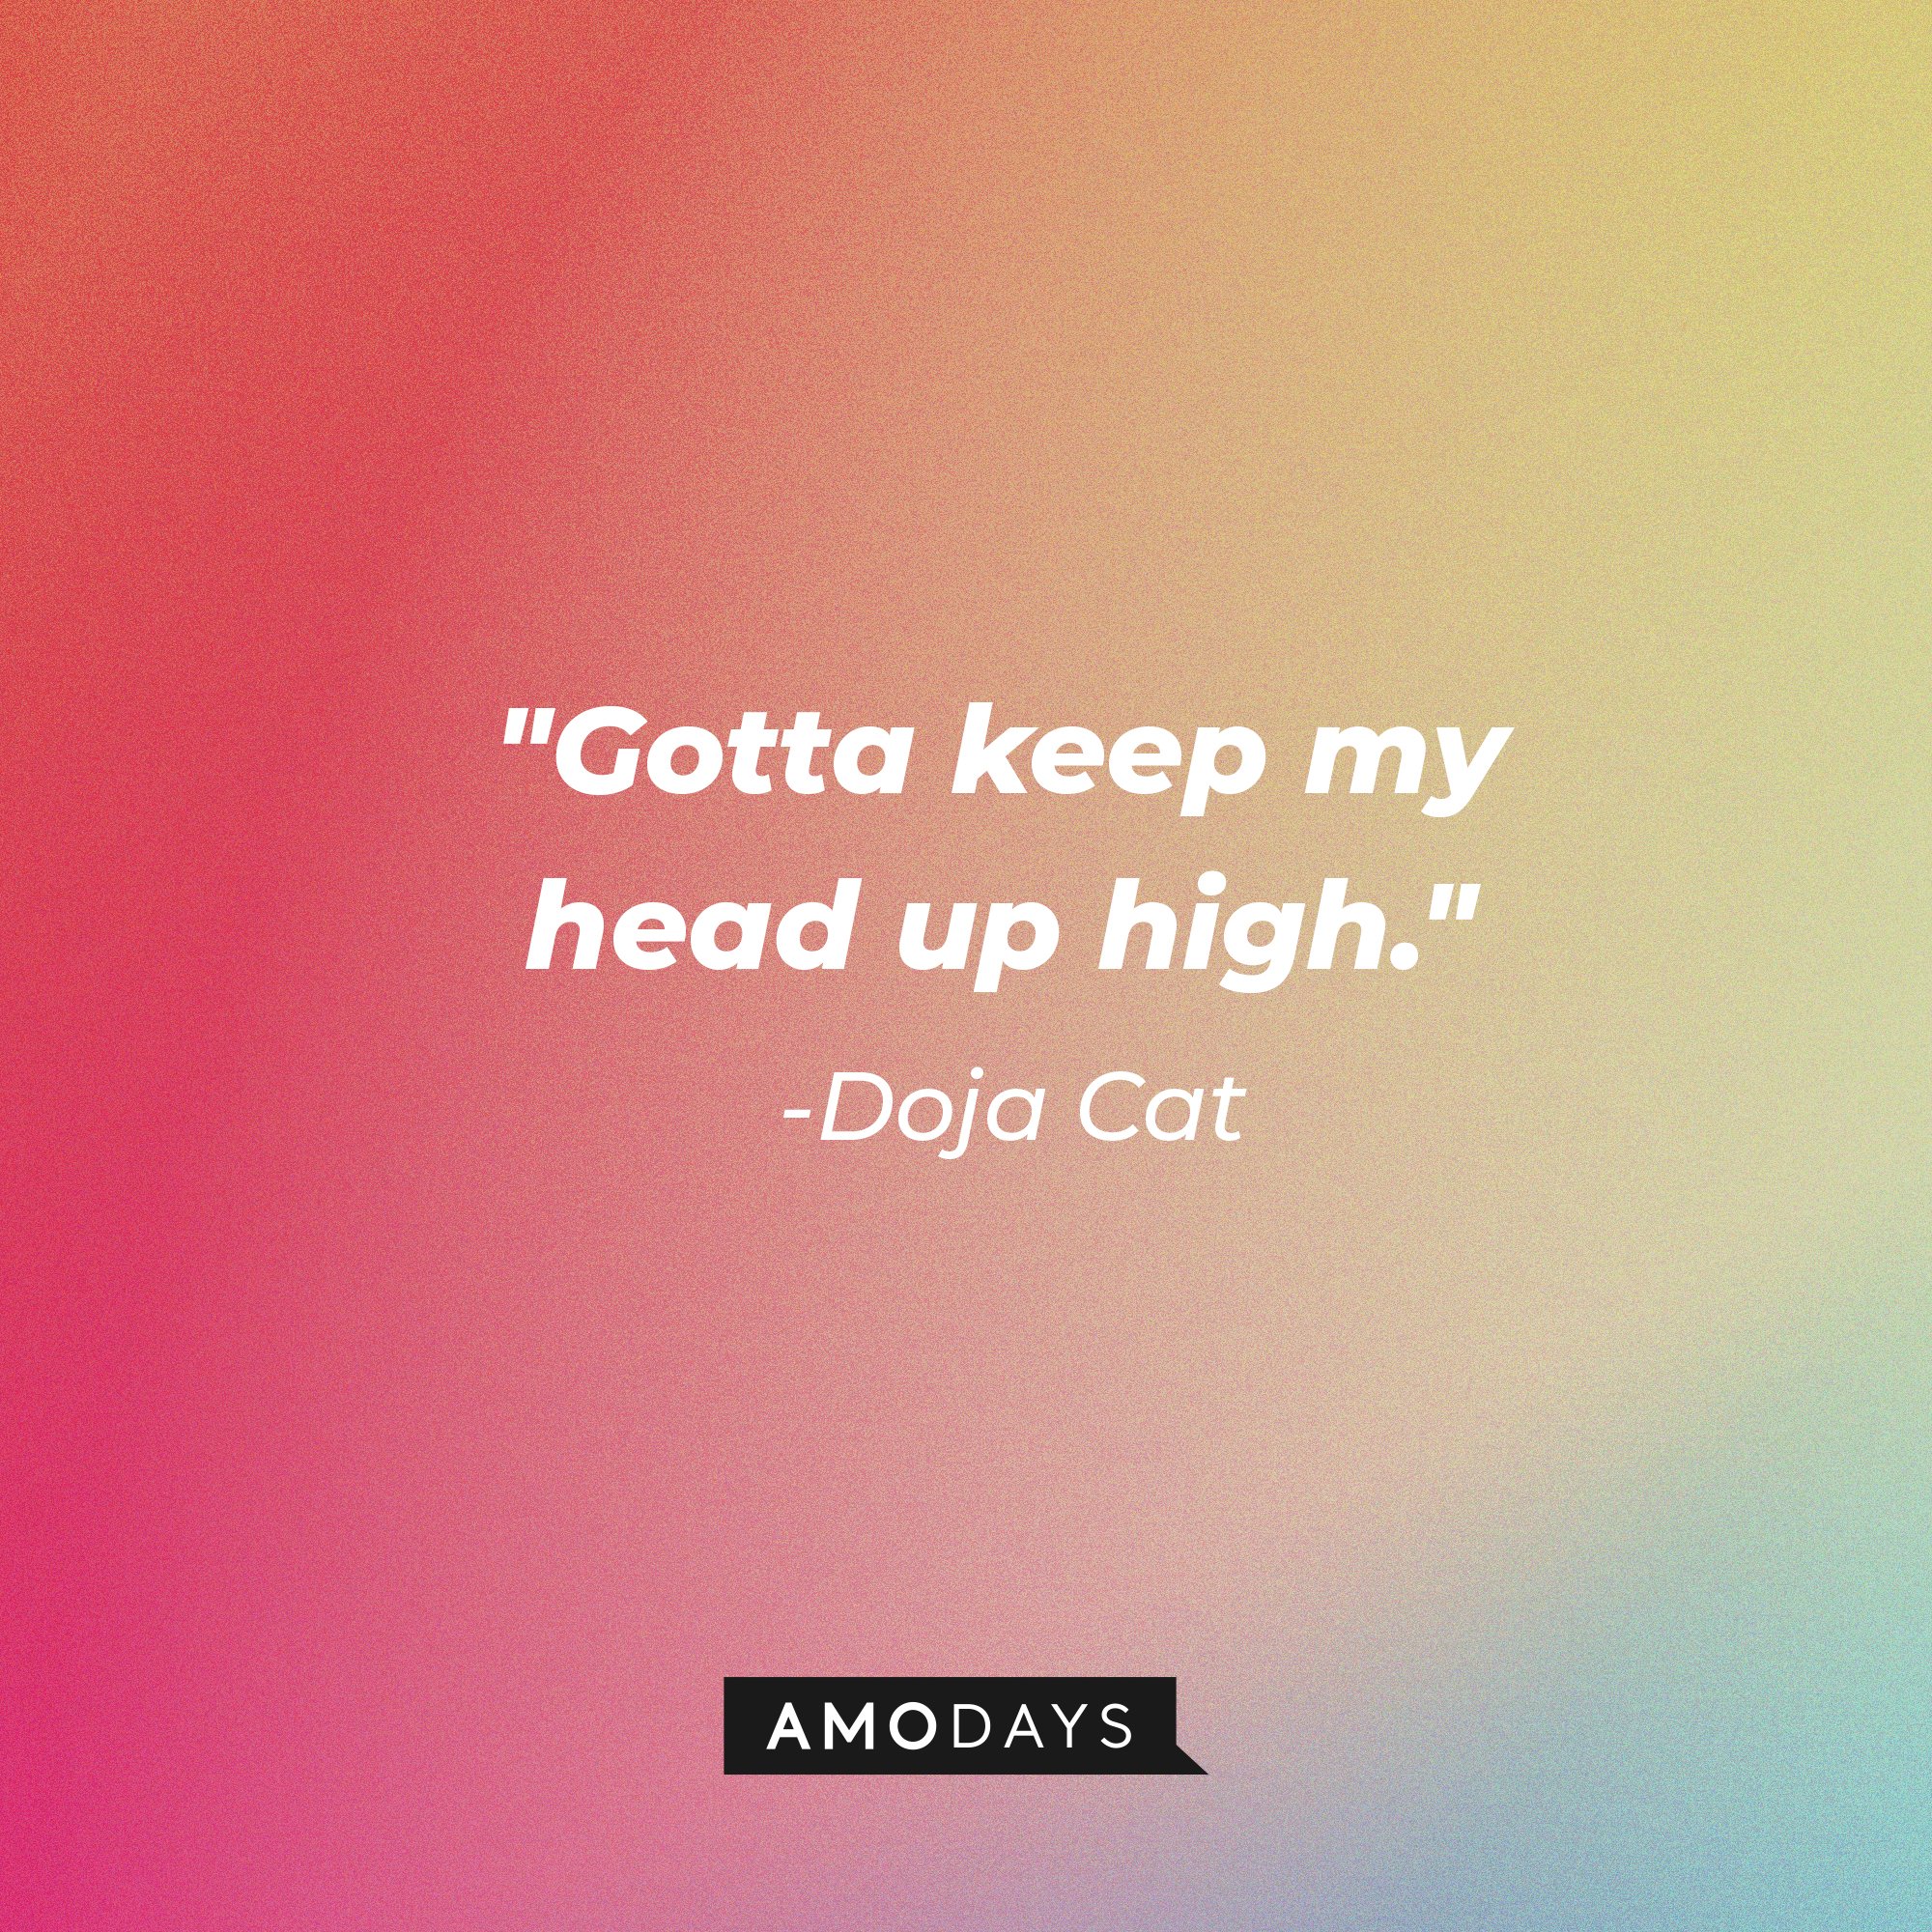 Doja Cat's quote: "Gotta keep my head up high." | Image: AmoDays